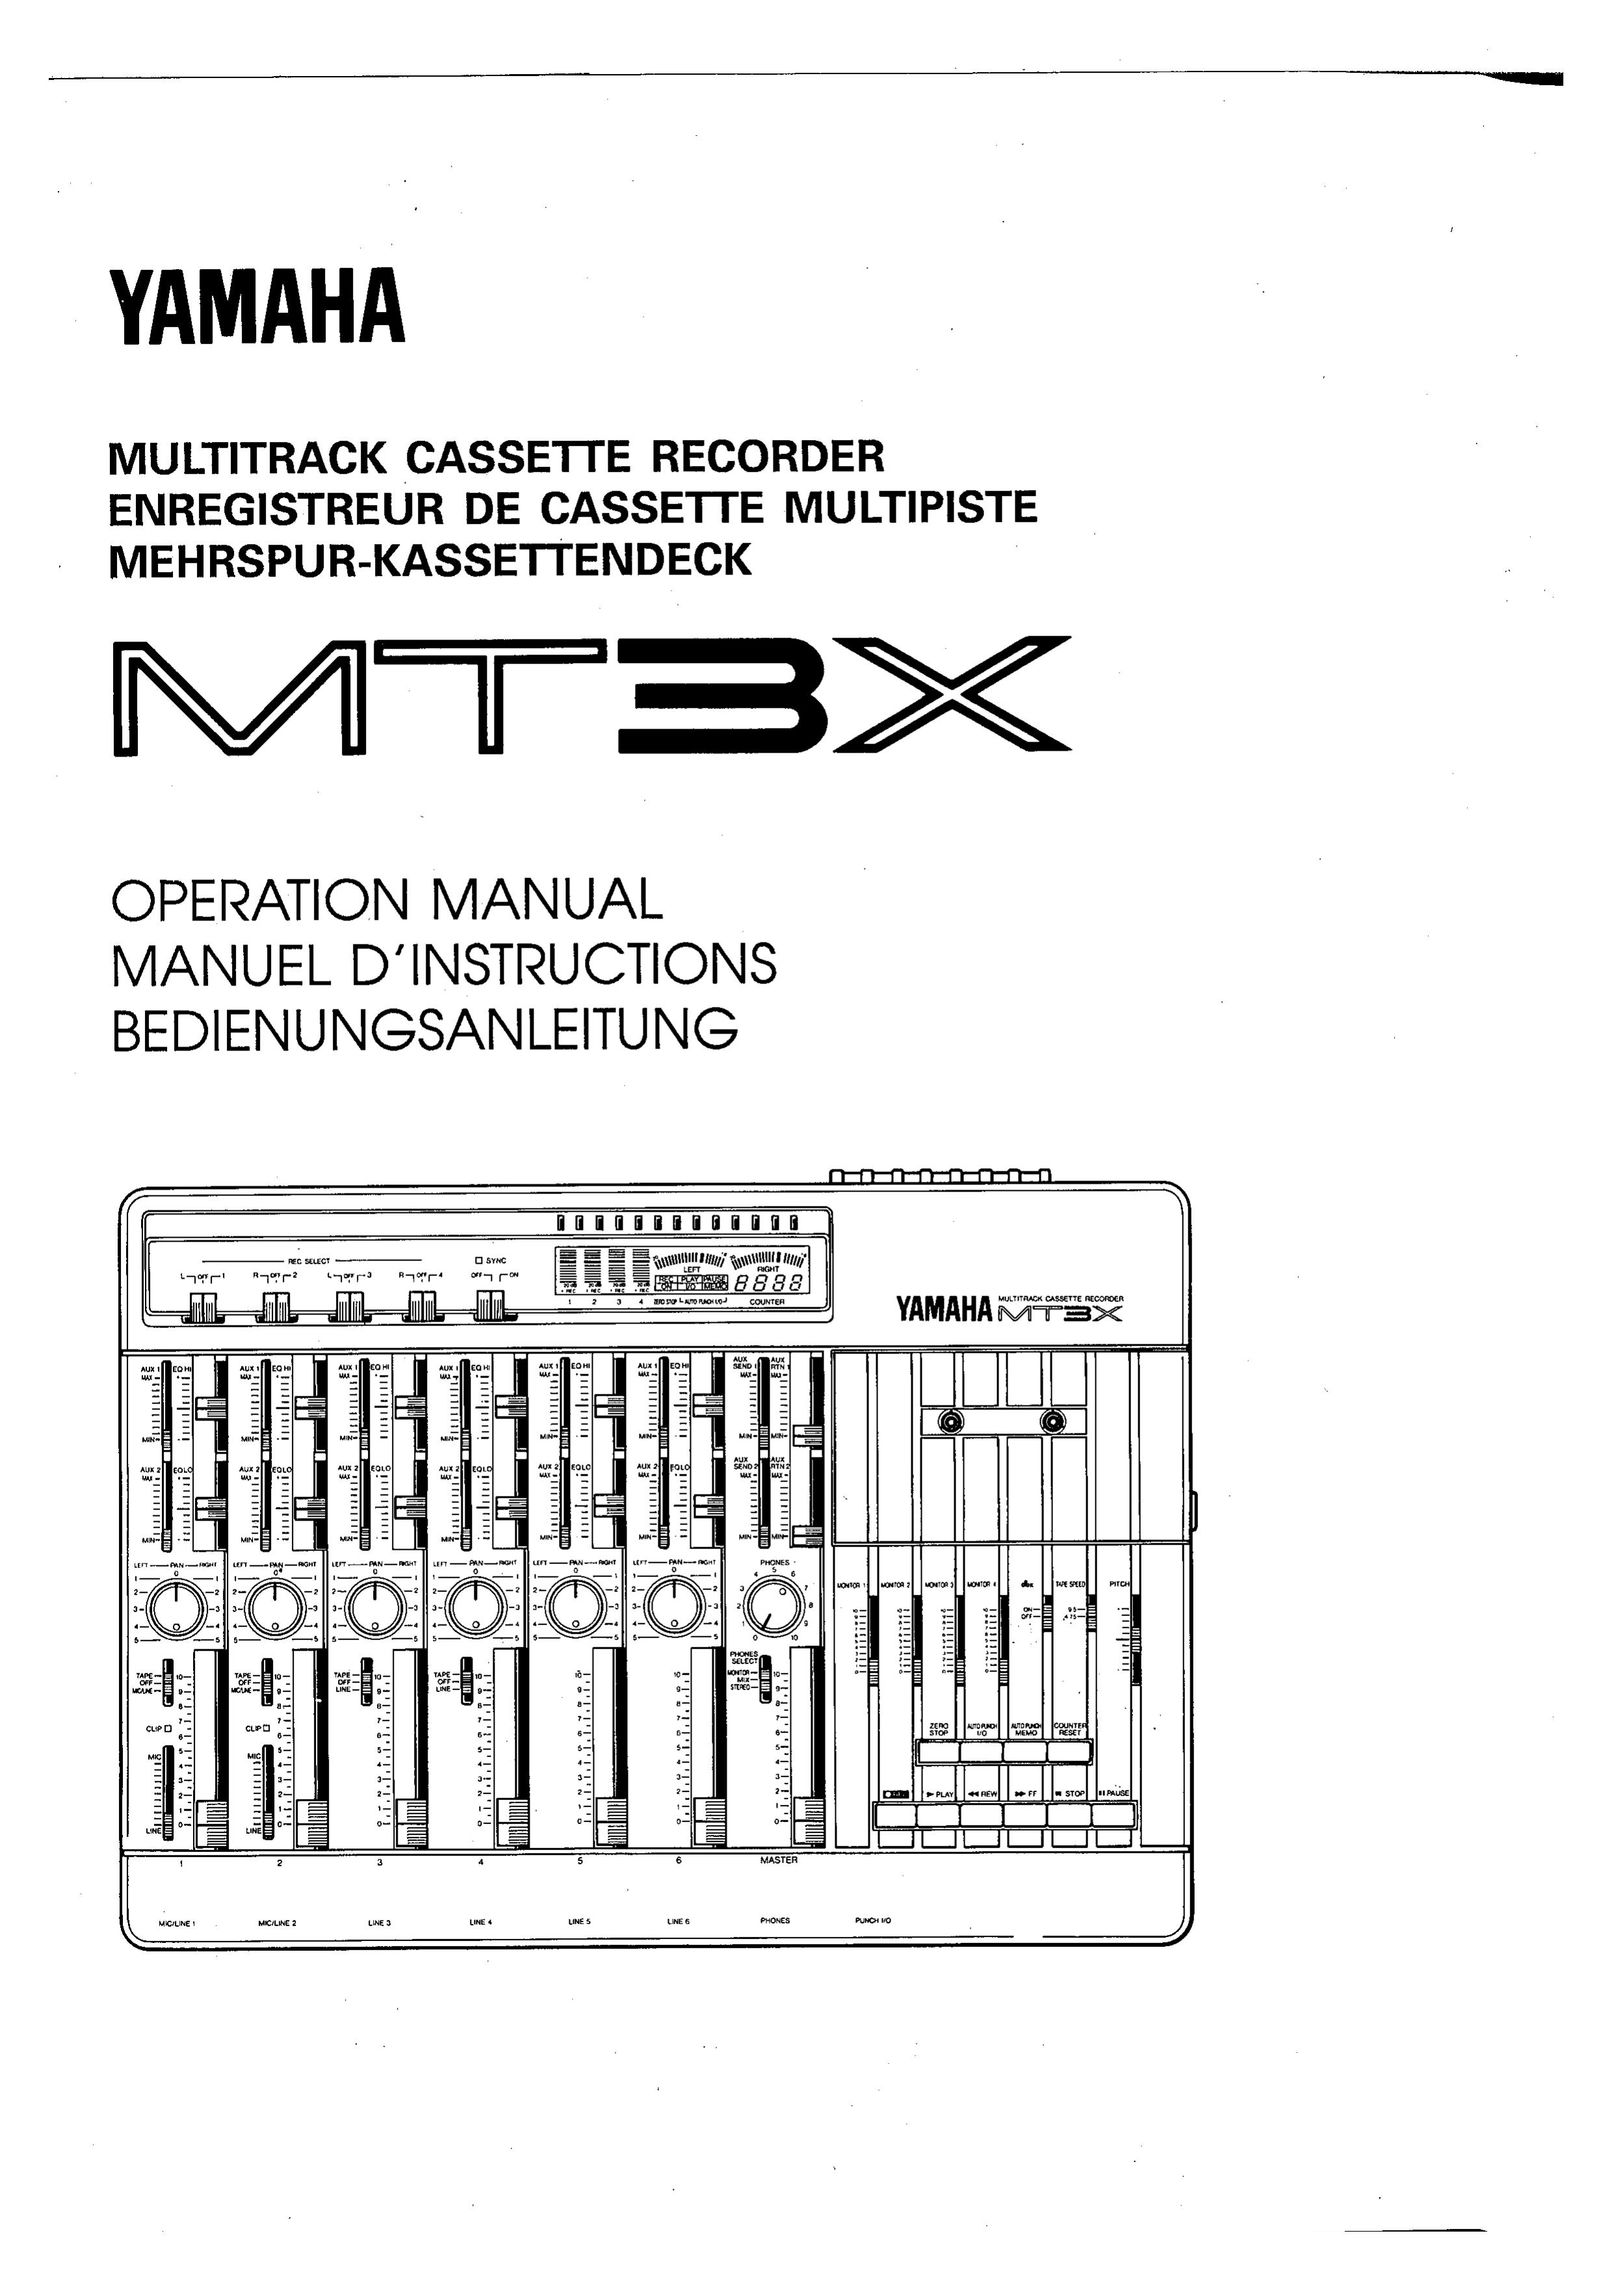 Yamaha MT3X Microcassette Recorder User Manual